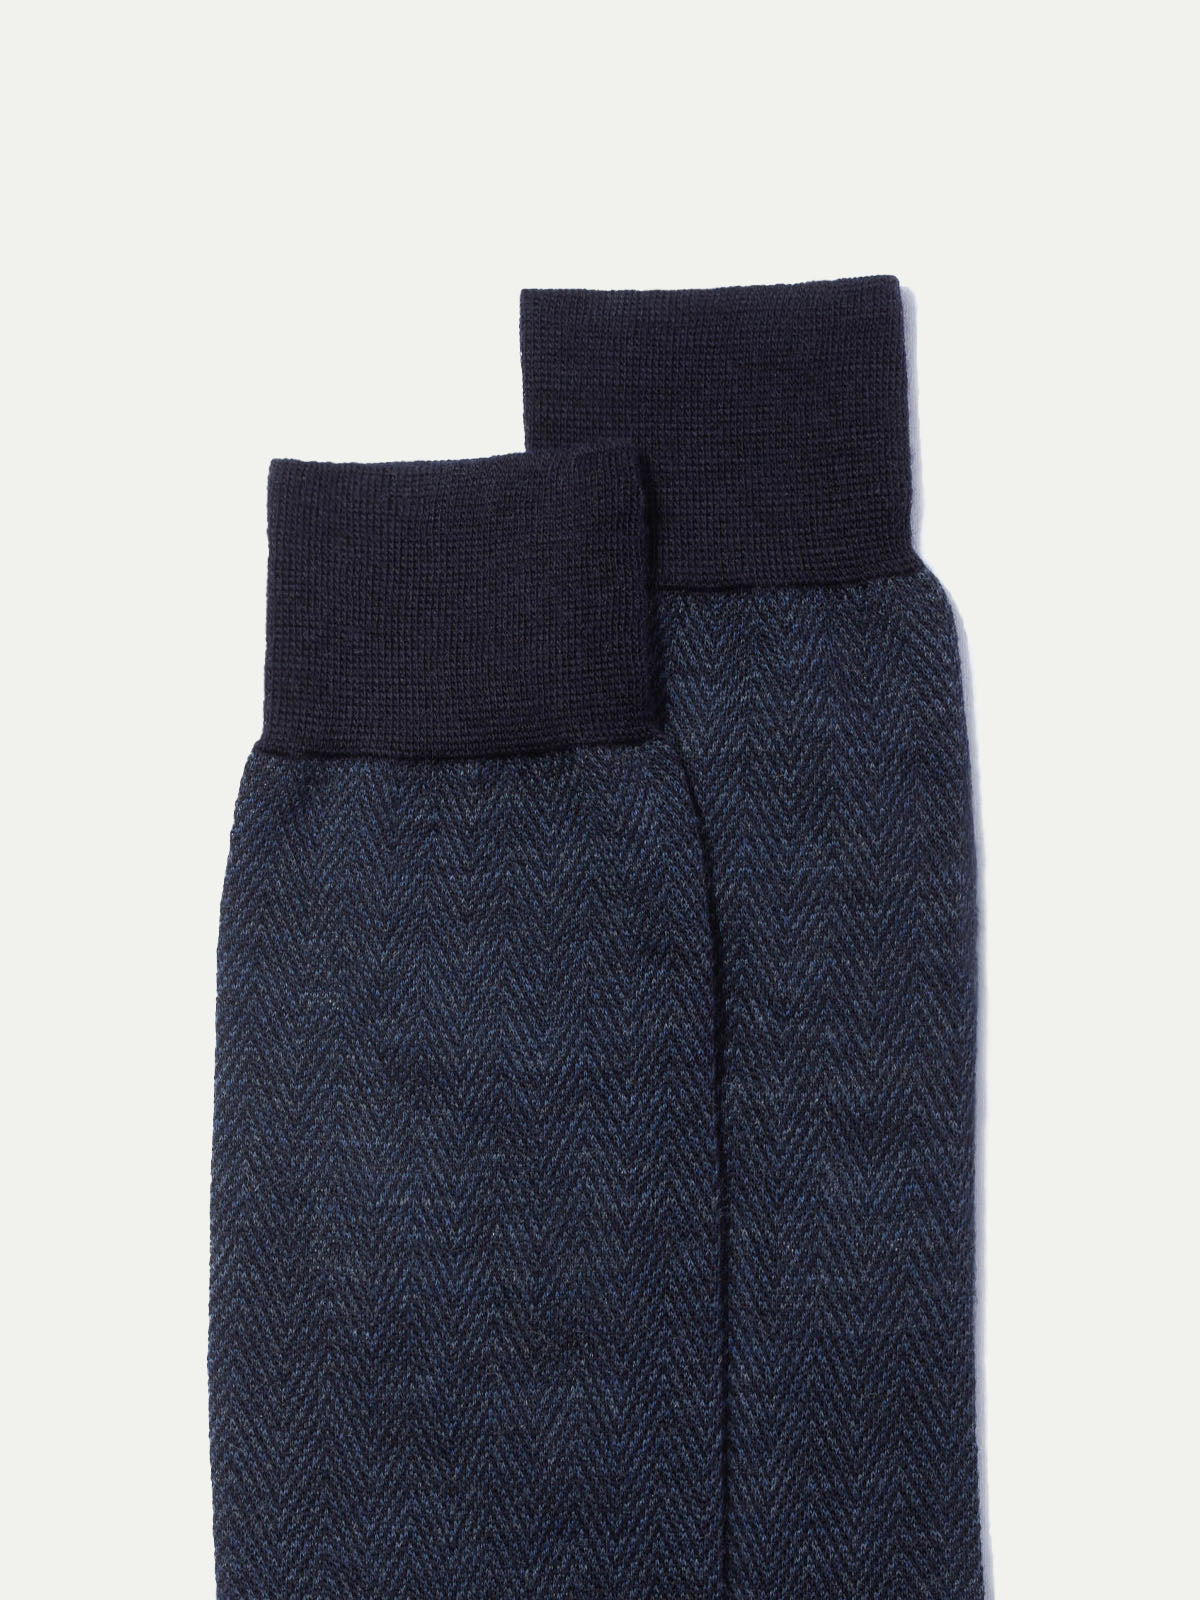 Blue herringbone short socks - Made in Italy